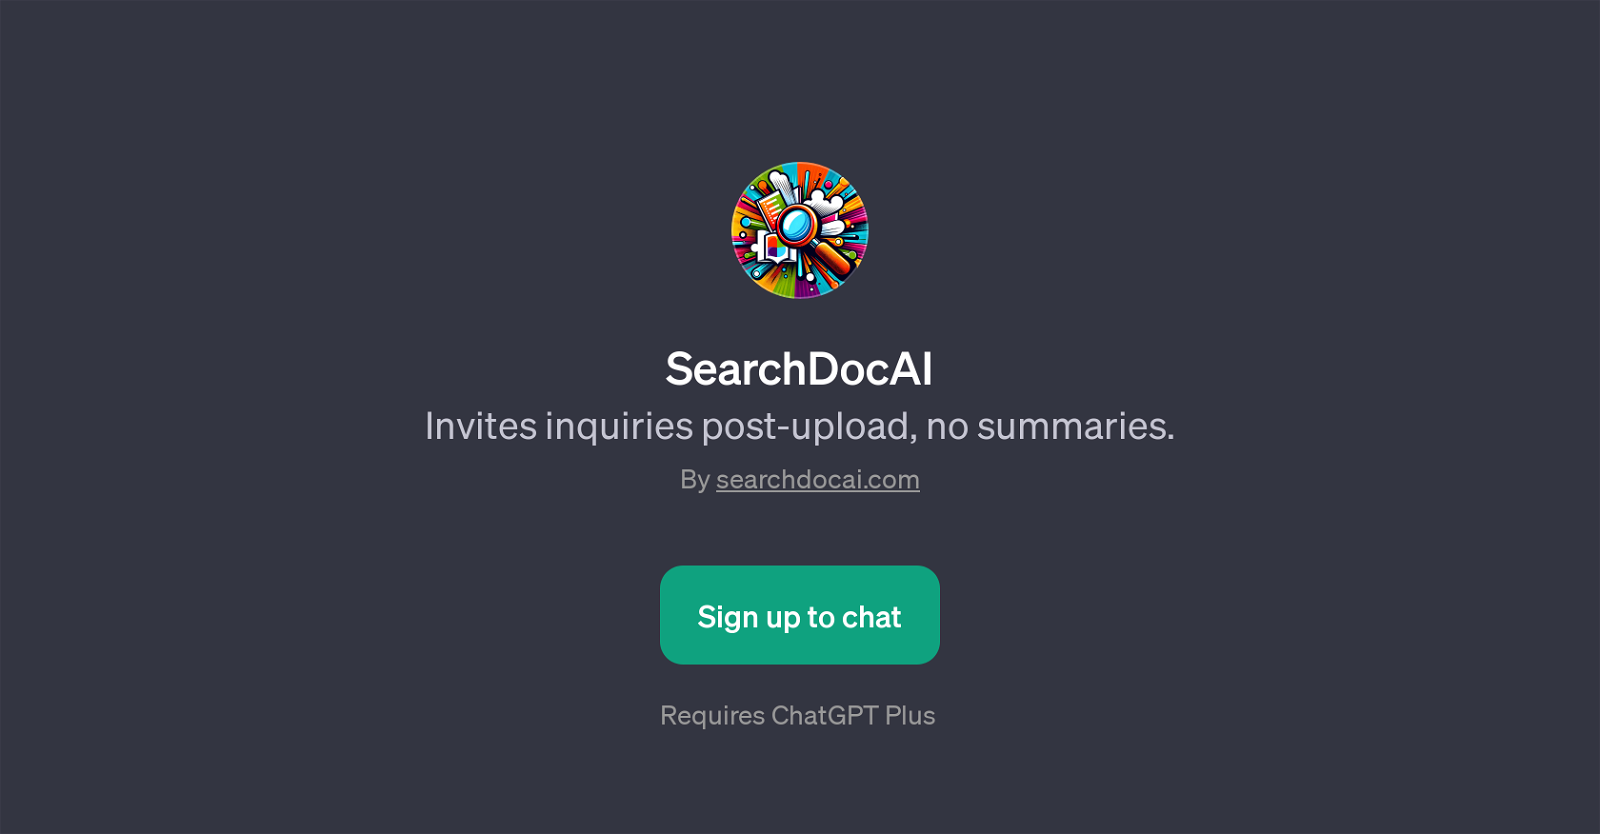 SearchDocAI website